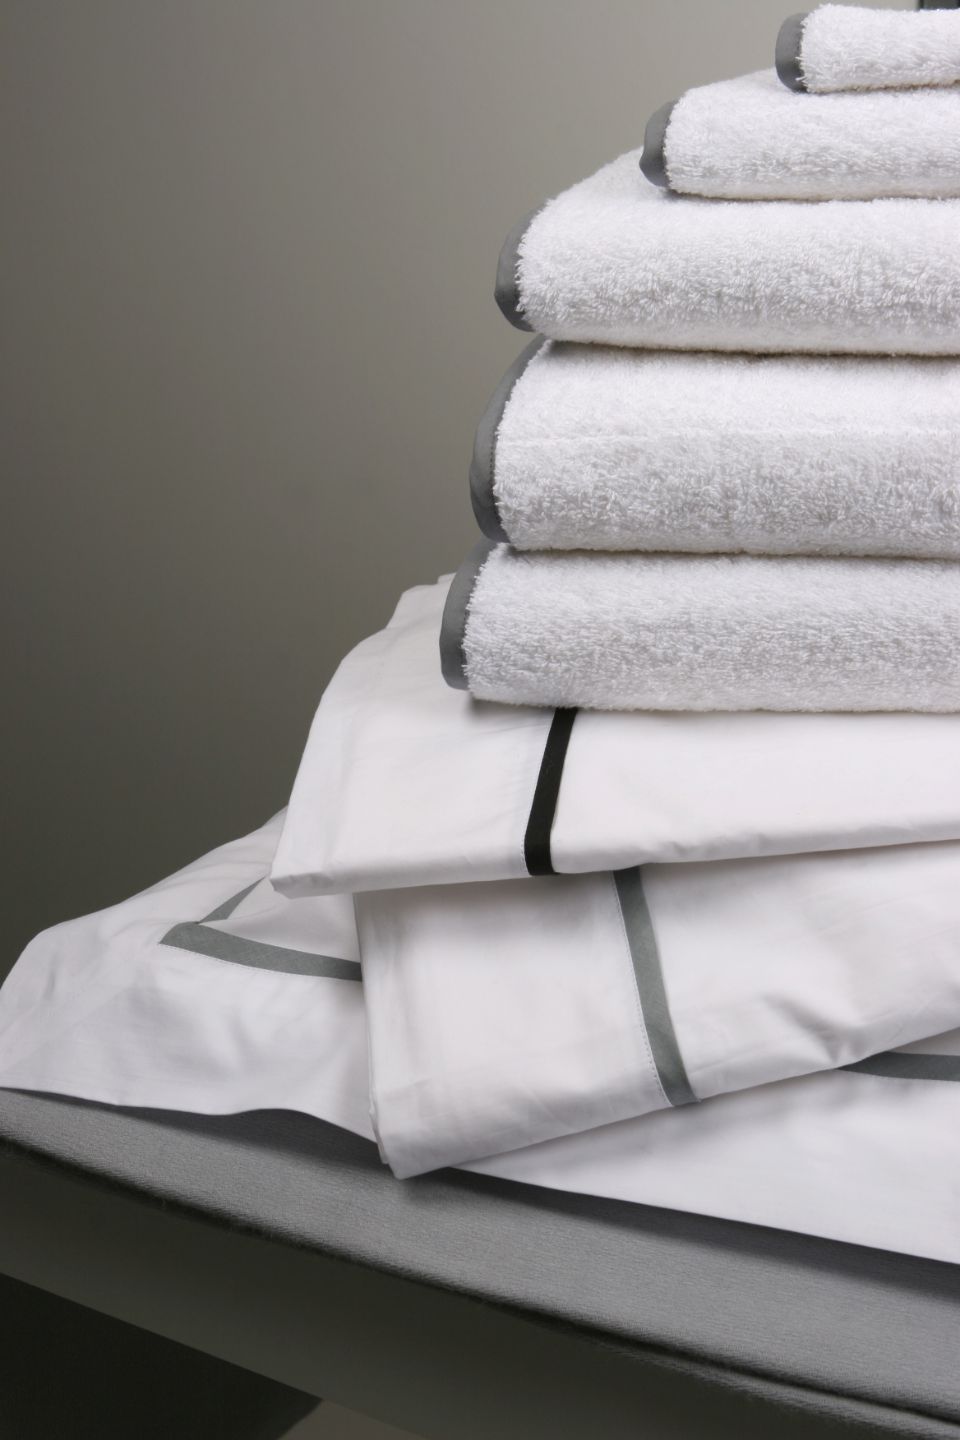 Asciugamani bianchi con lenzuola